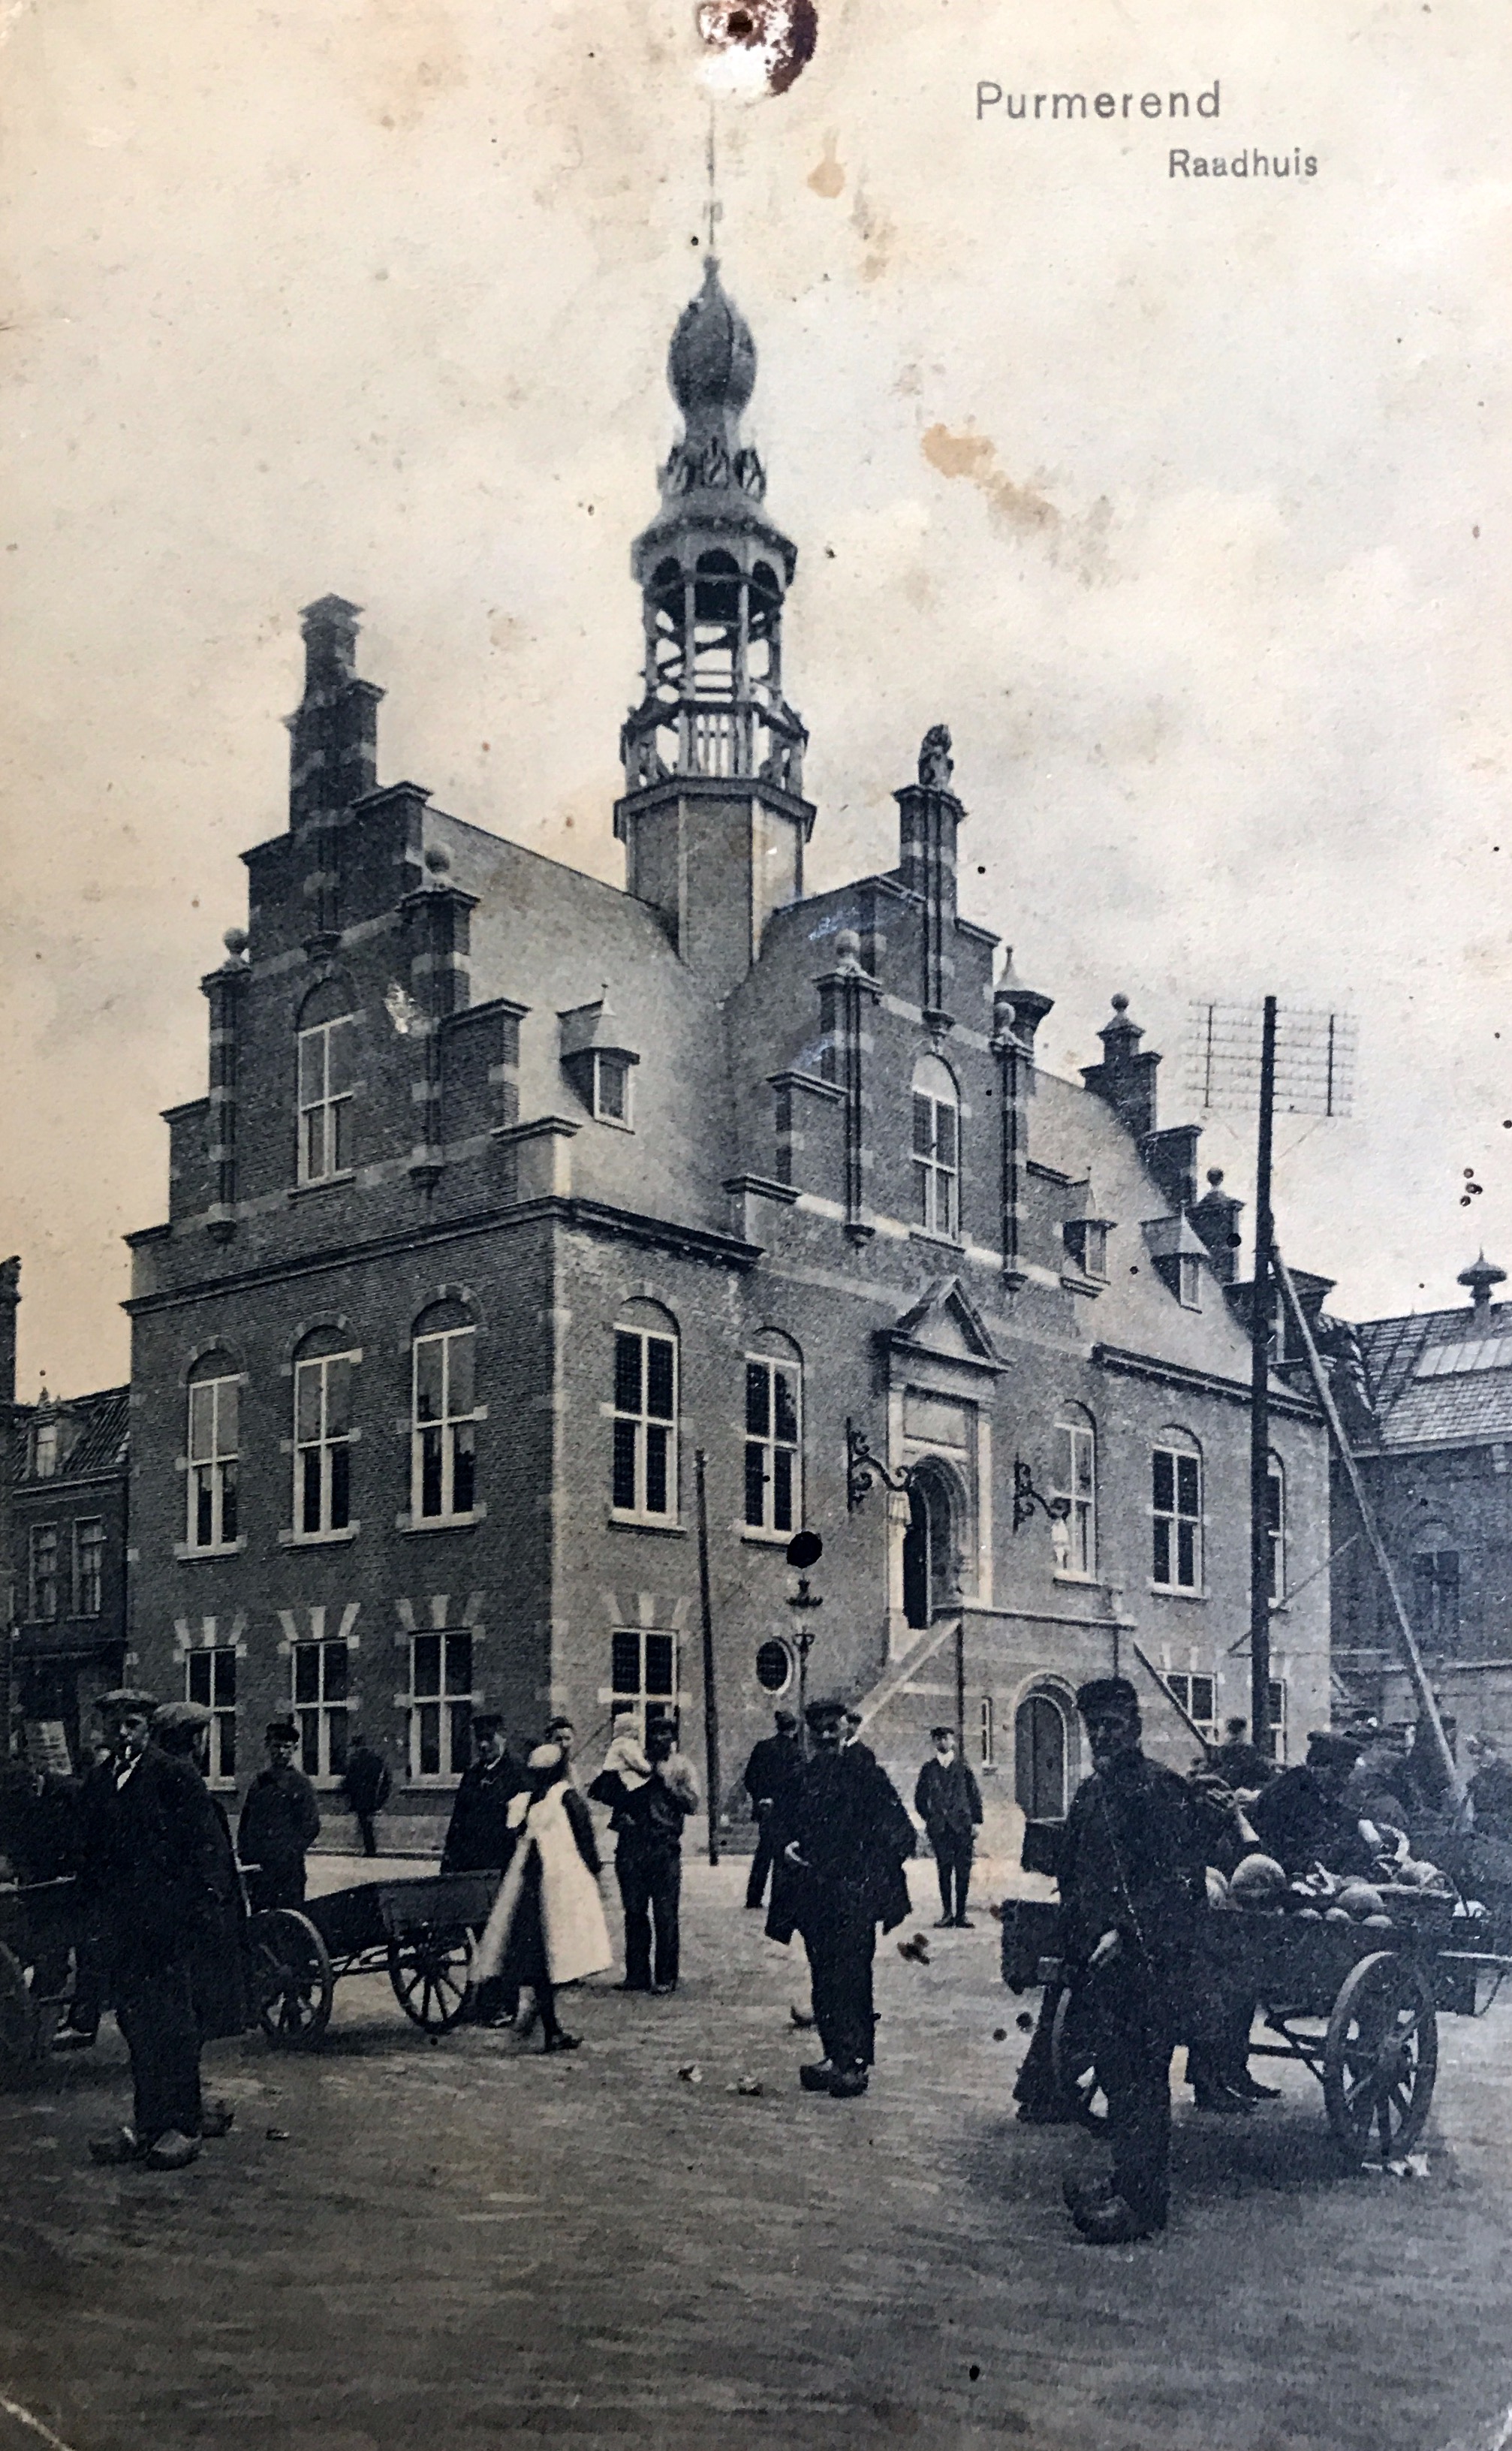 Ansichtkaart stadhuis Purmerend 
1901-1905
Nanning de Vries